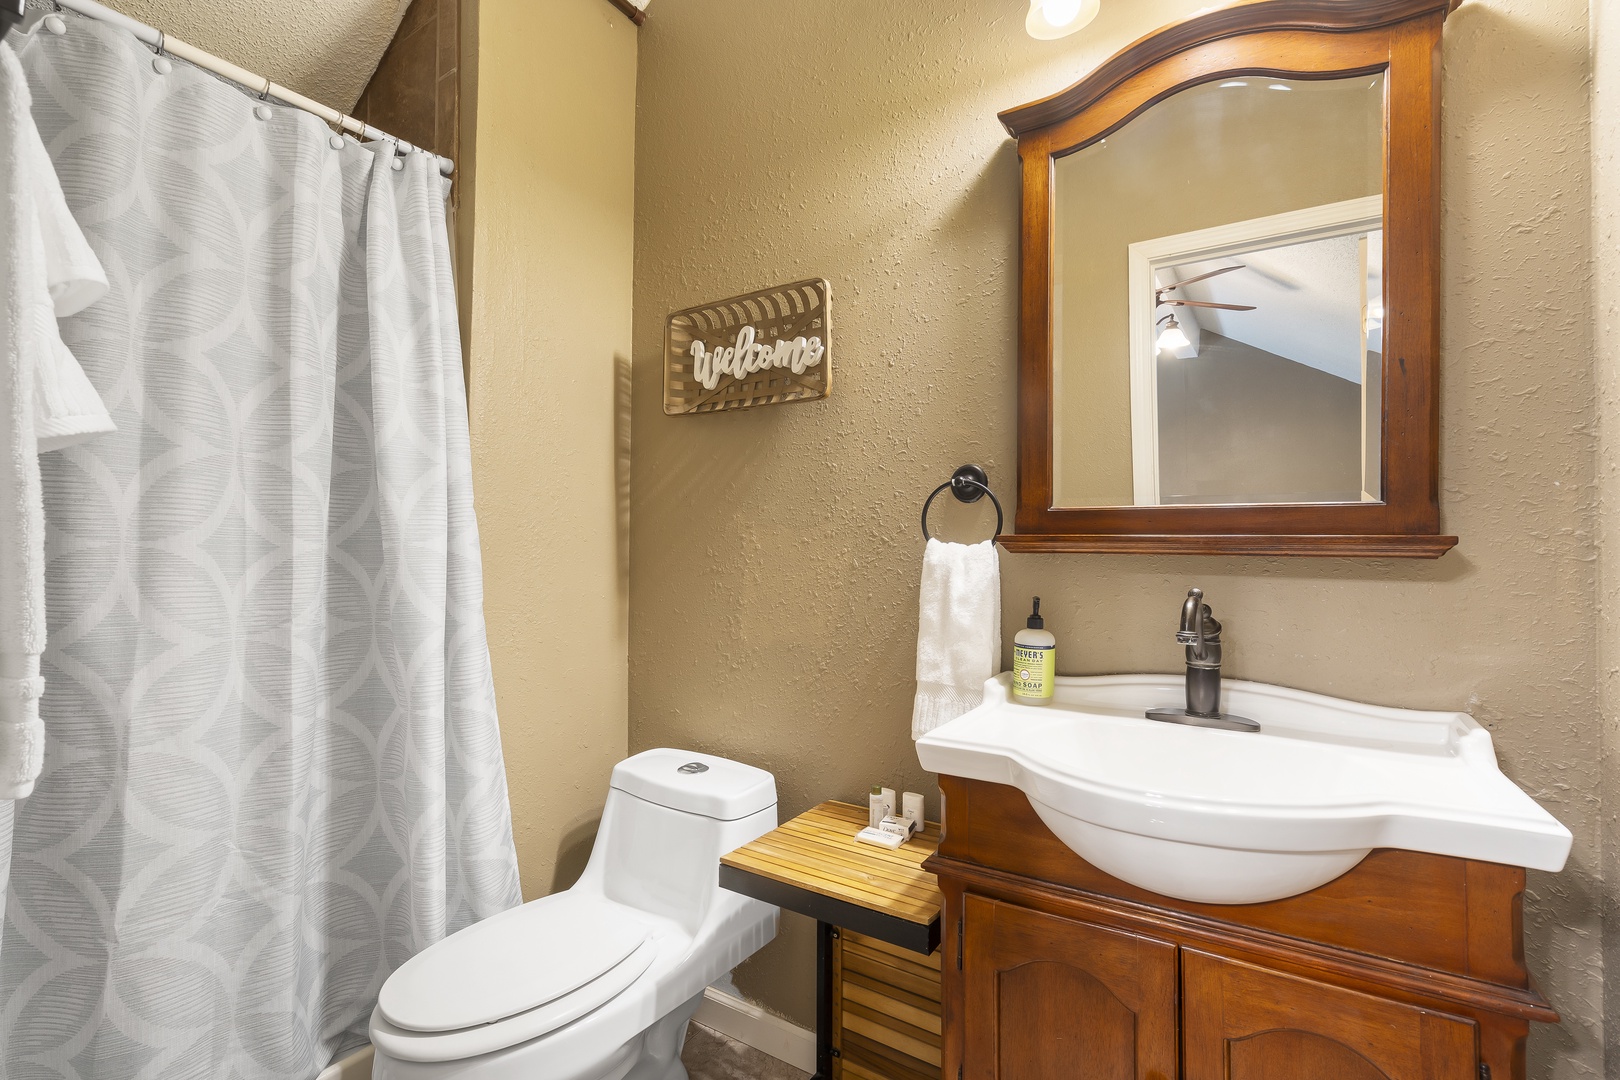 The loft bedroom ensuite offers a single vanity & shower